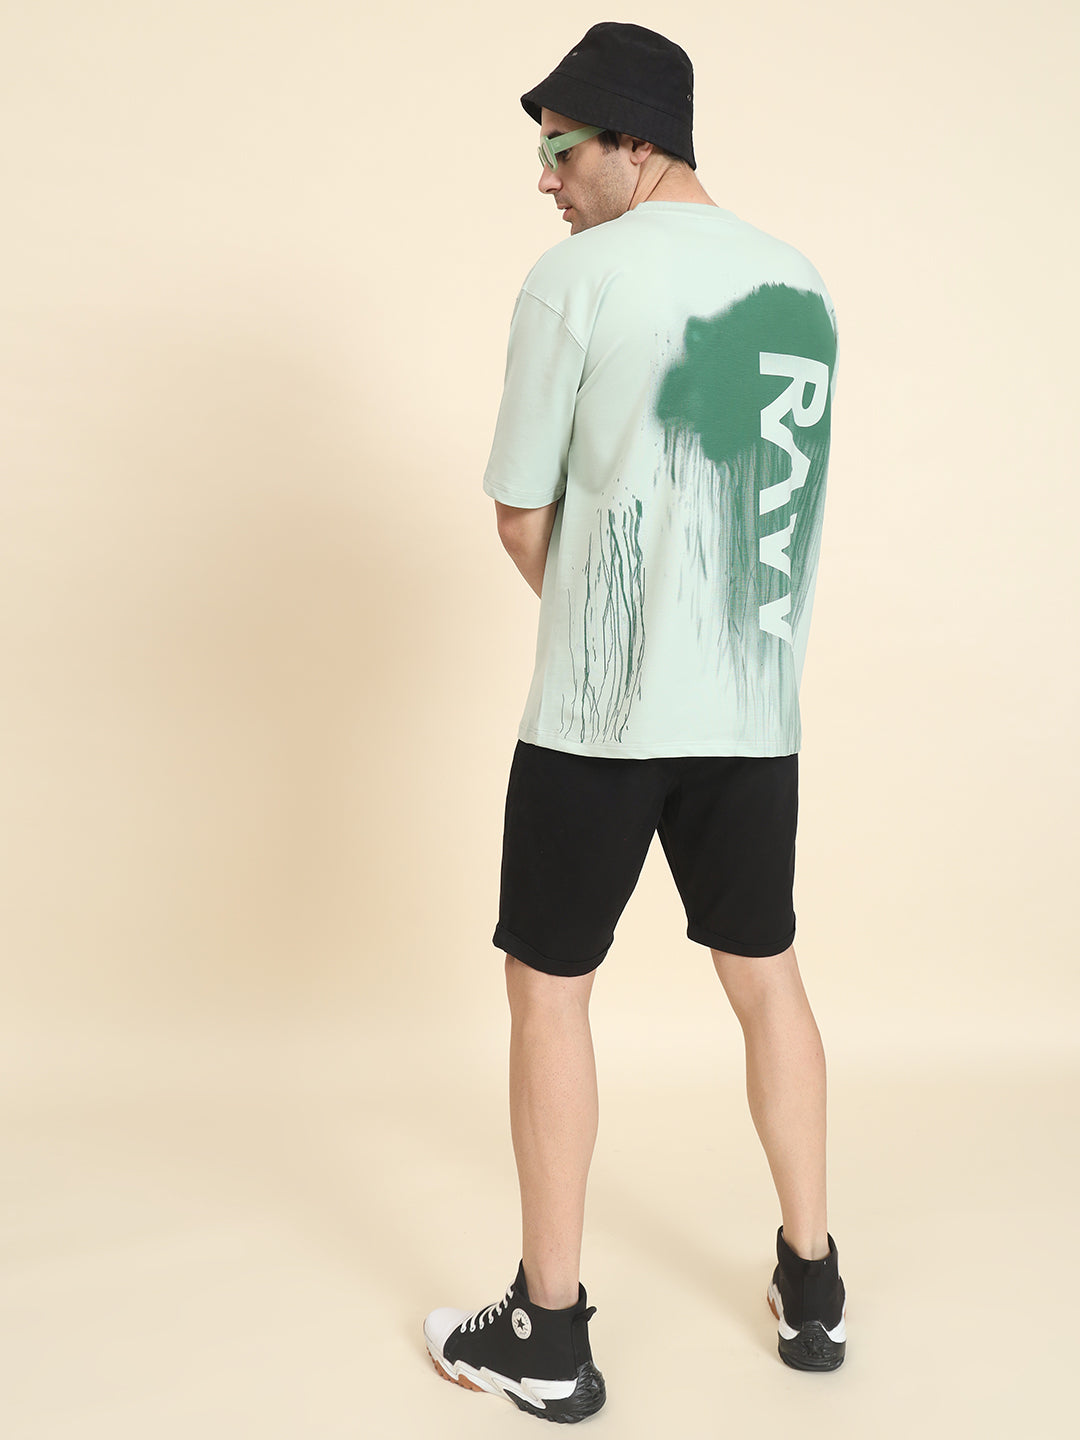 Raw Print Oversized Pista Green T-Shirt